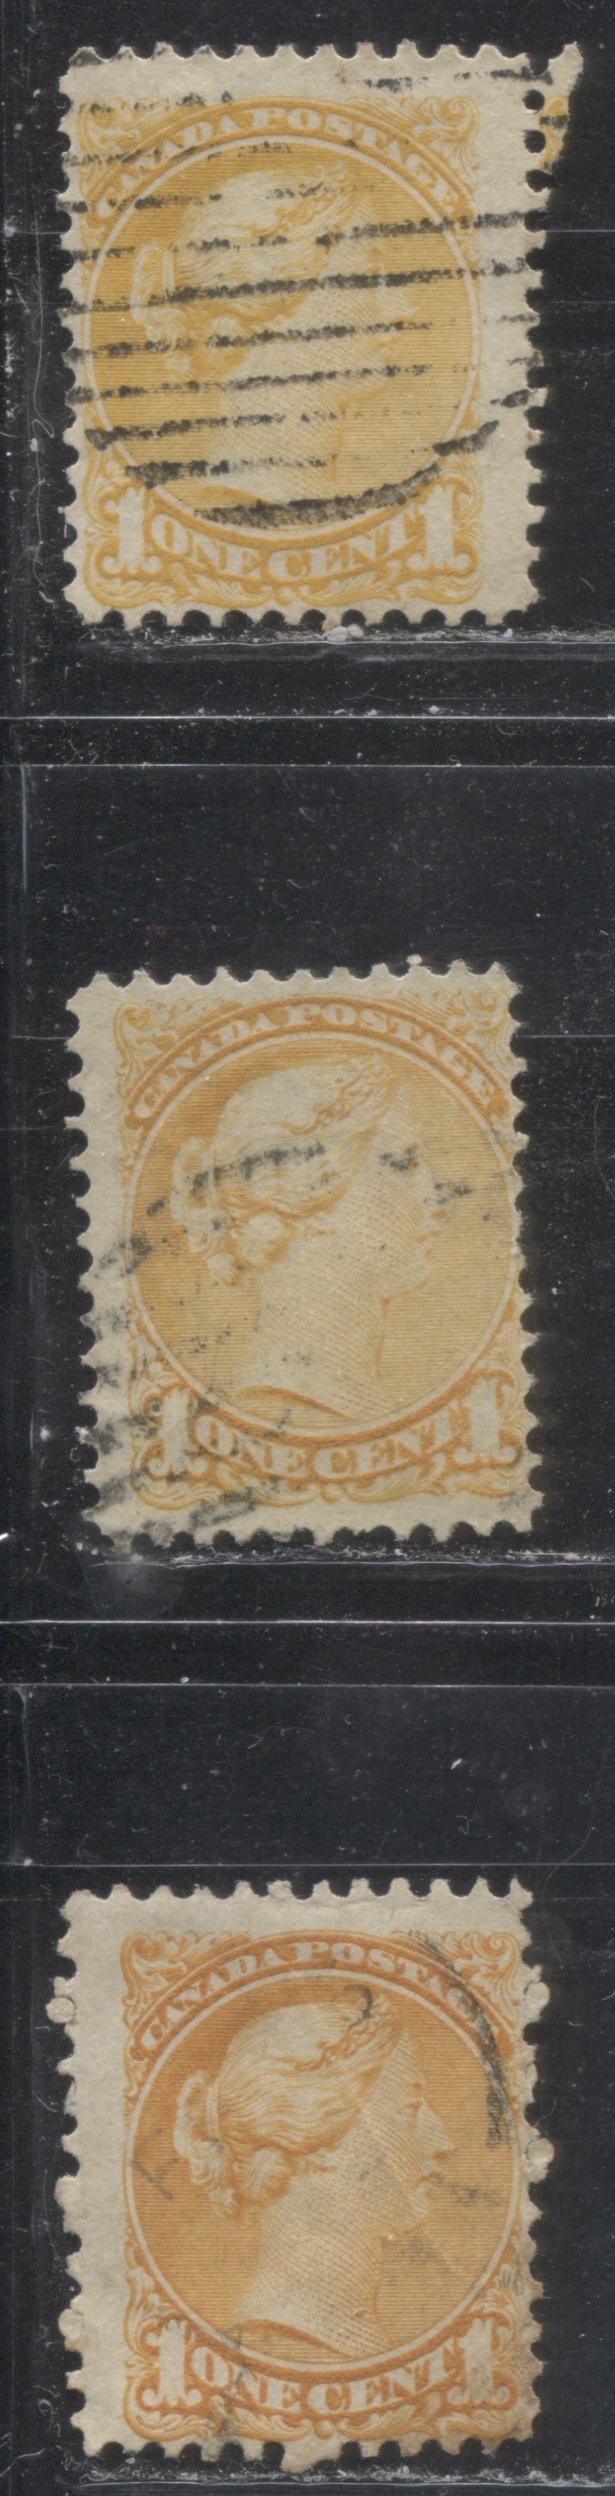 Lot 149 Canada #35iii,d 1c Lemon Yellow, Orange & Yellow Queen Victoria, 1870-1897 Small Queen Issue, Three Fine Used Singles On Vertical Wove Paper, Perfs 11.7 x 12, 11.75 x 12 & 11.6 x 12.1